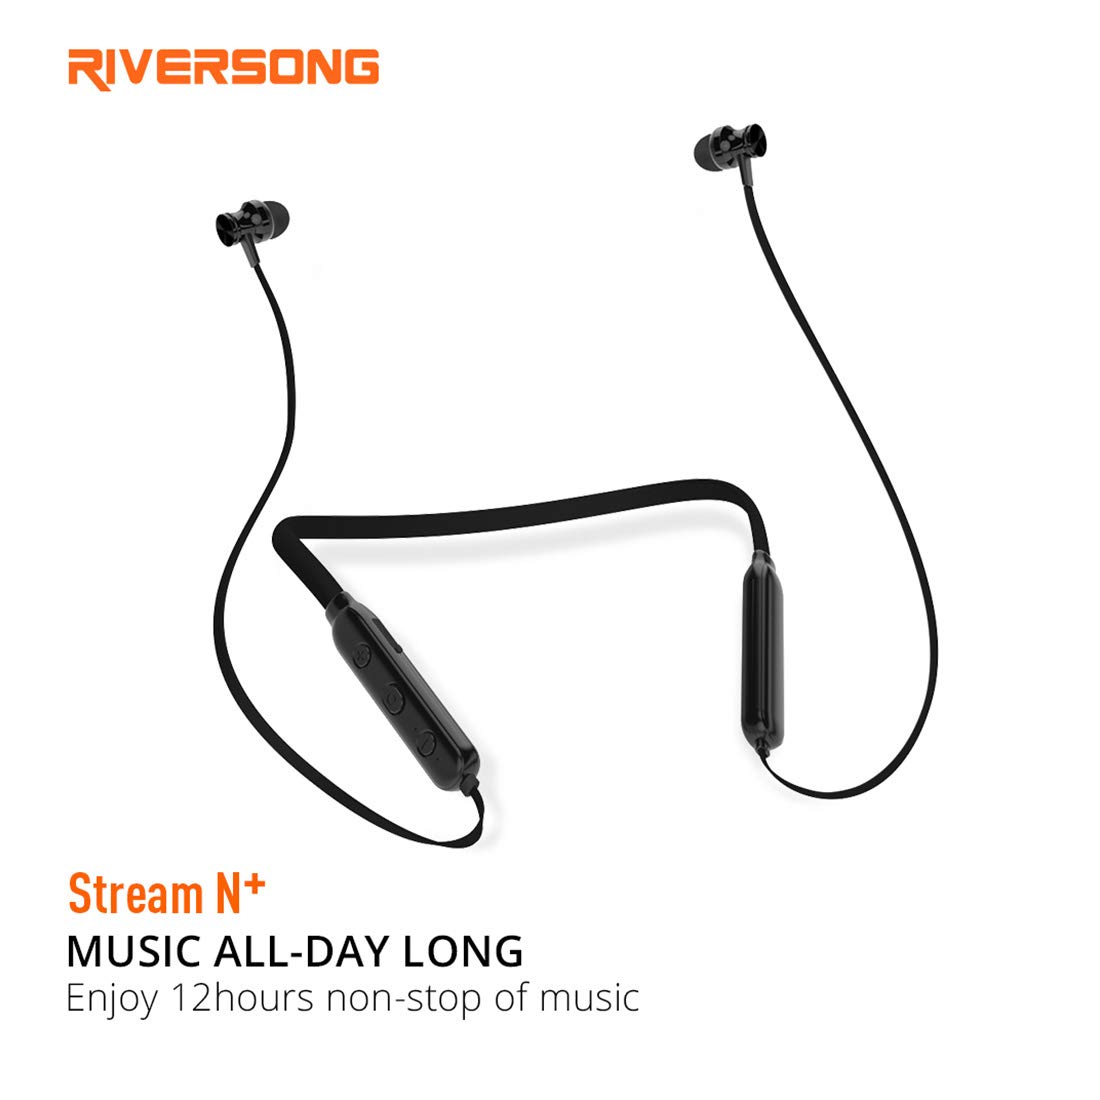 Riversong Wireless Neckband Earphones, Black - STREAMN+-EA65